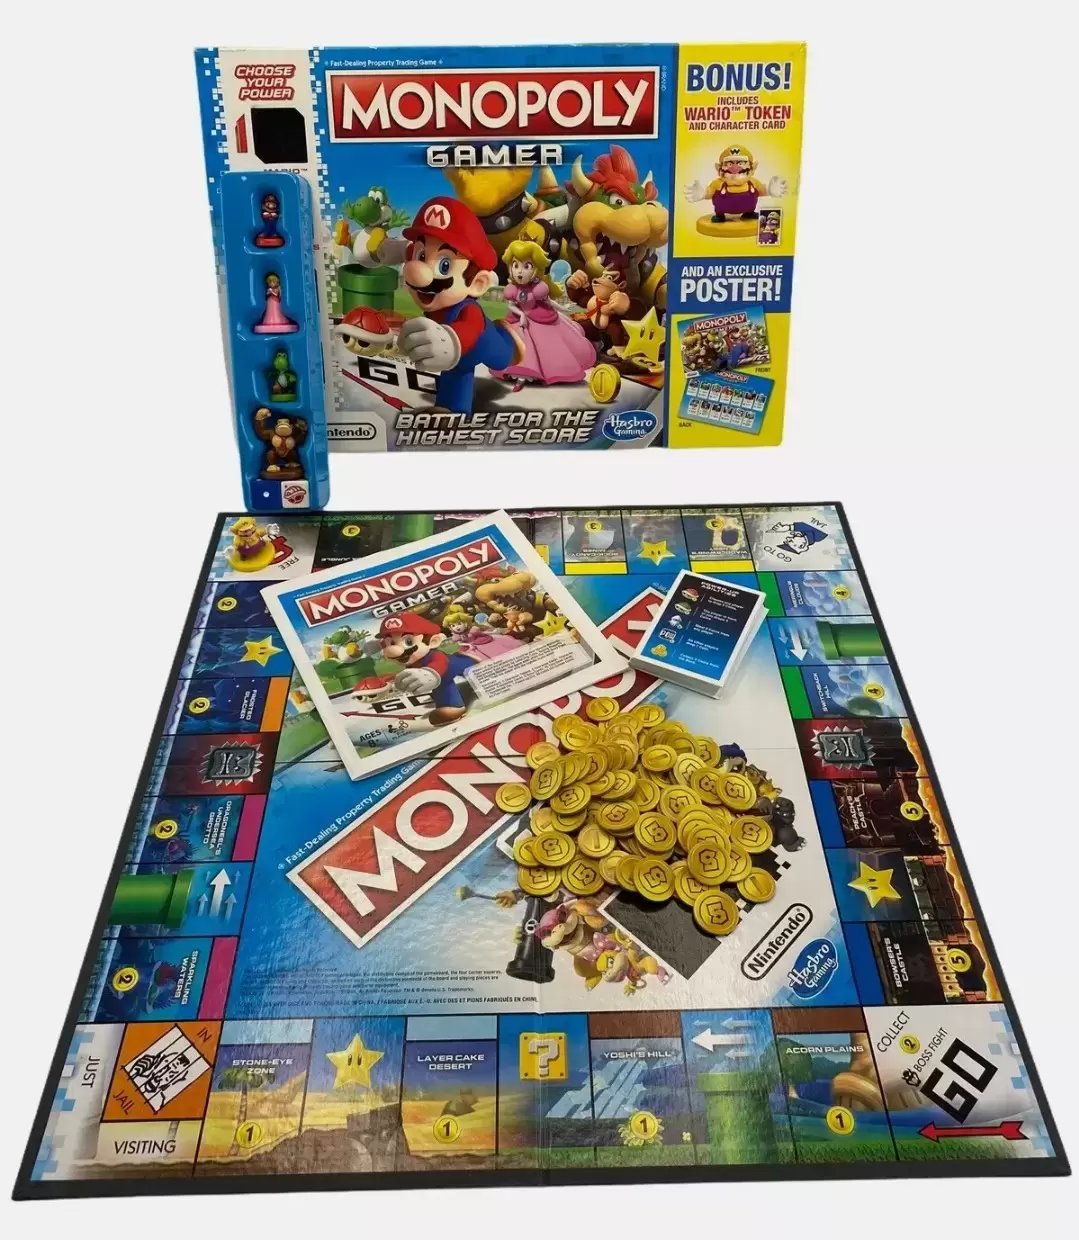 Monopoly Jeux vidéo - Monopoly Gamer Bonus !